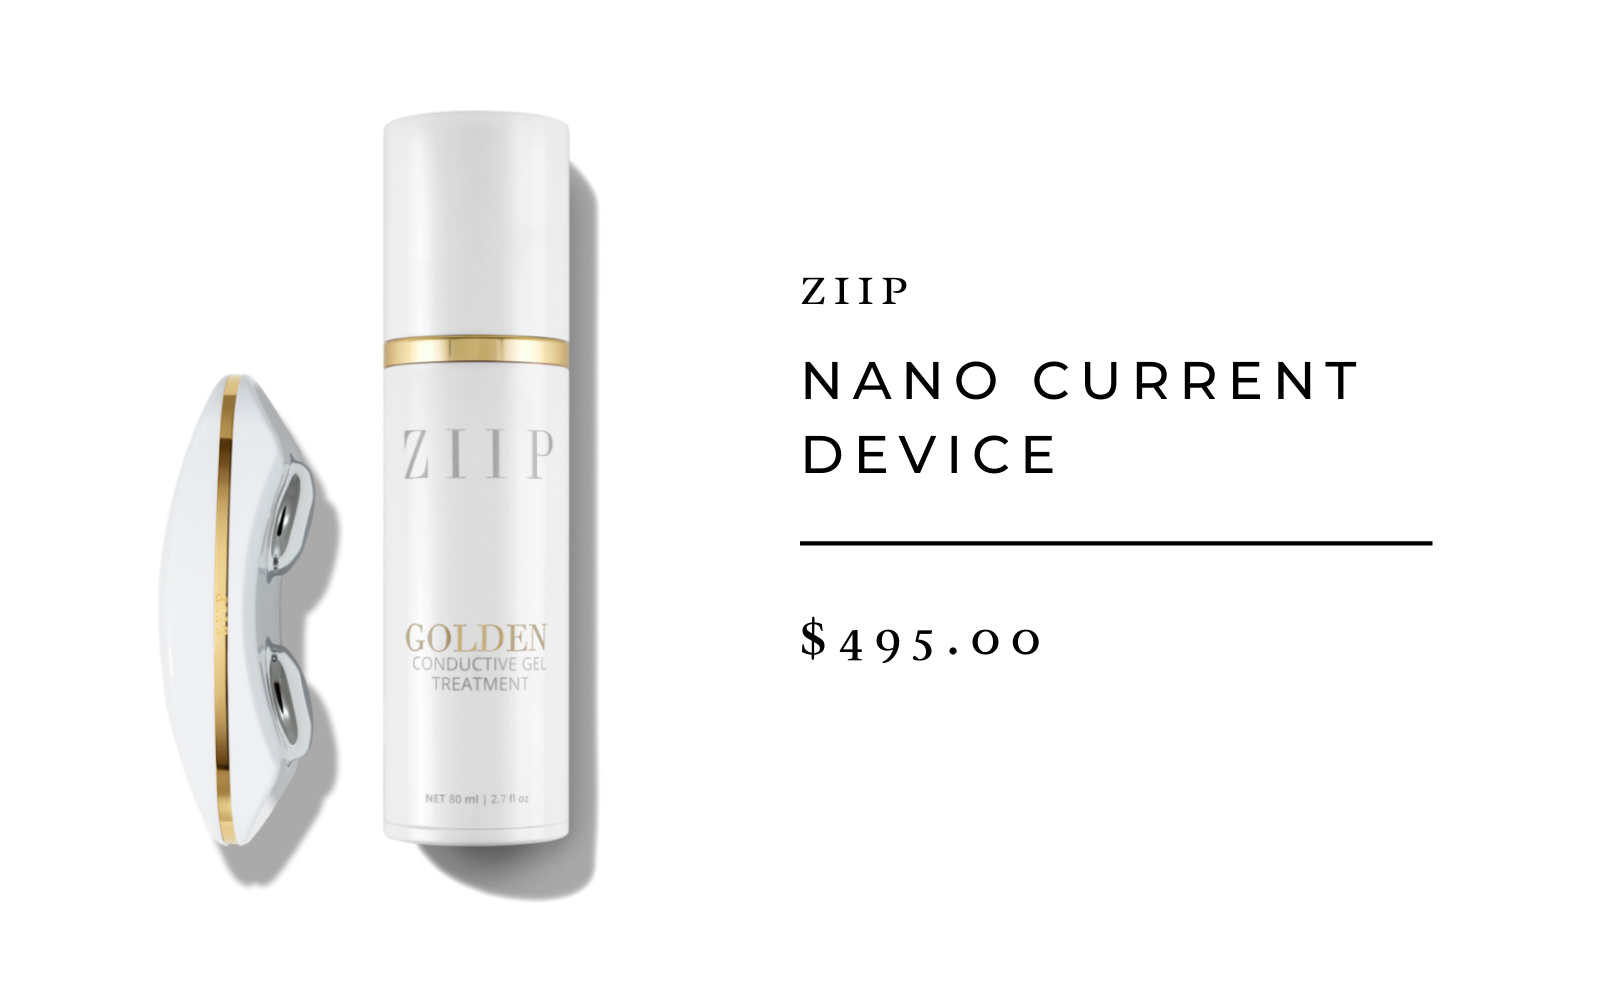 Ziip Nano Current Device